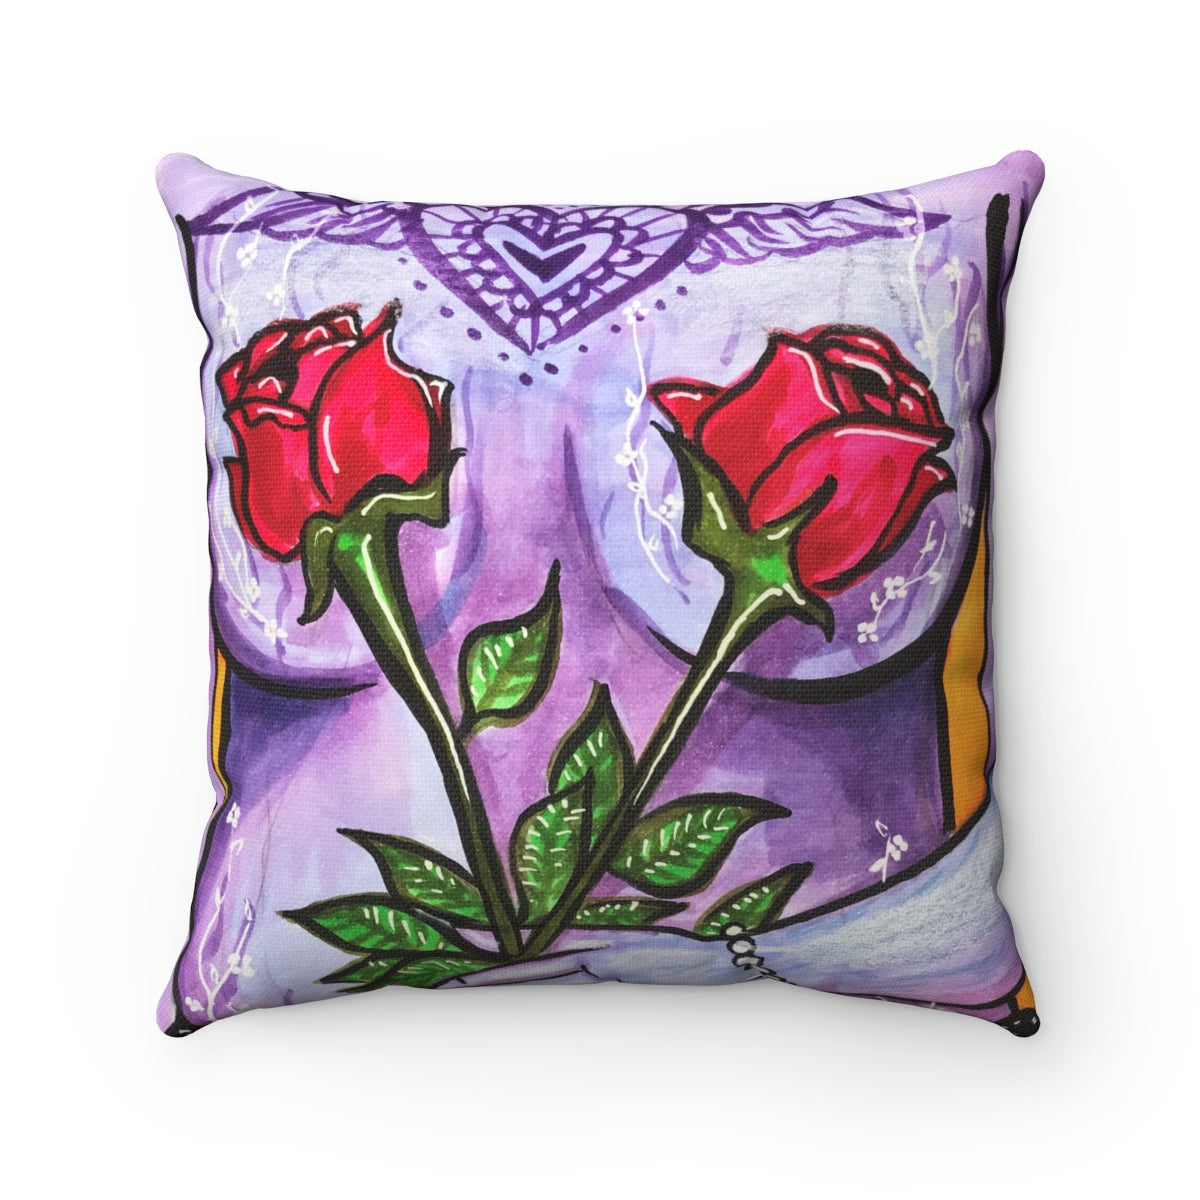 Pillow - Flower Girl Series (#2 - Purple)